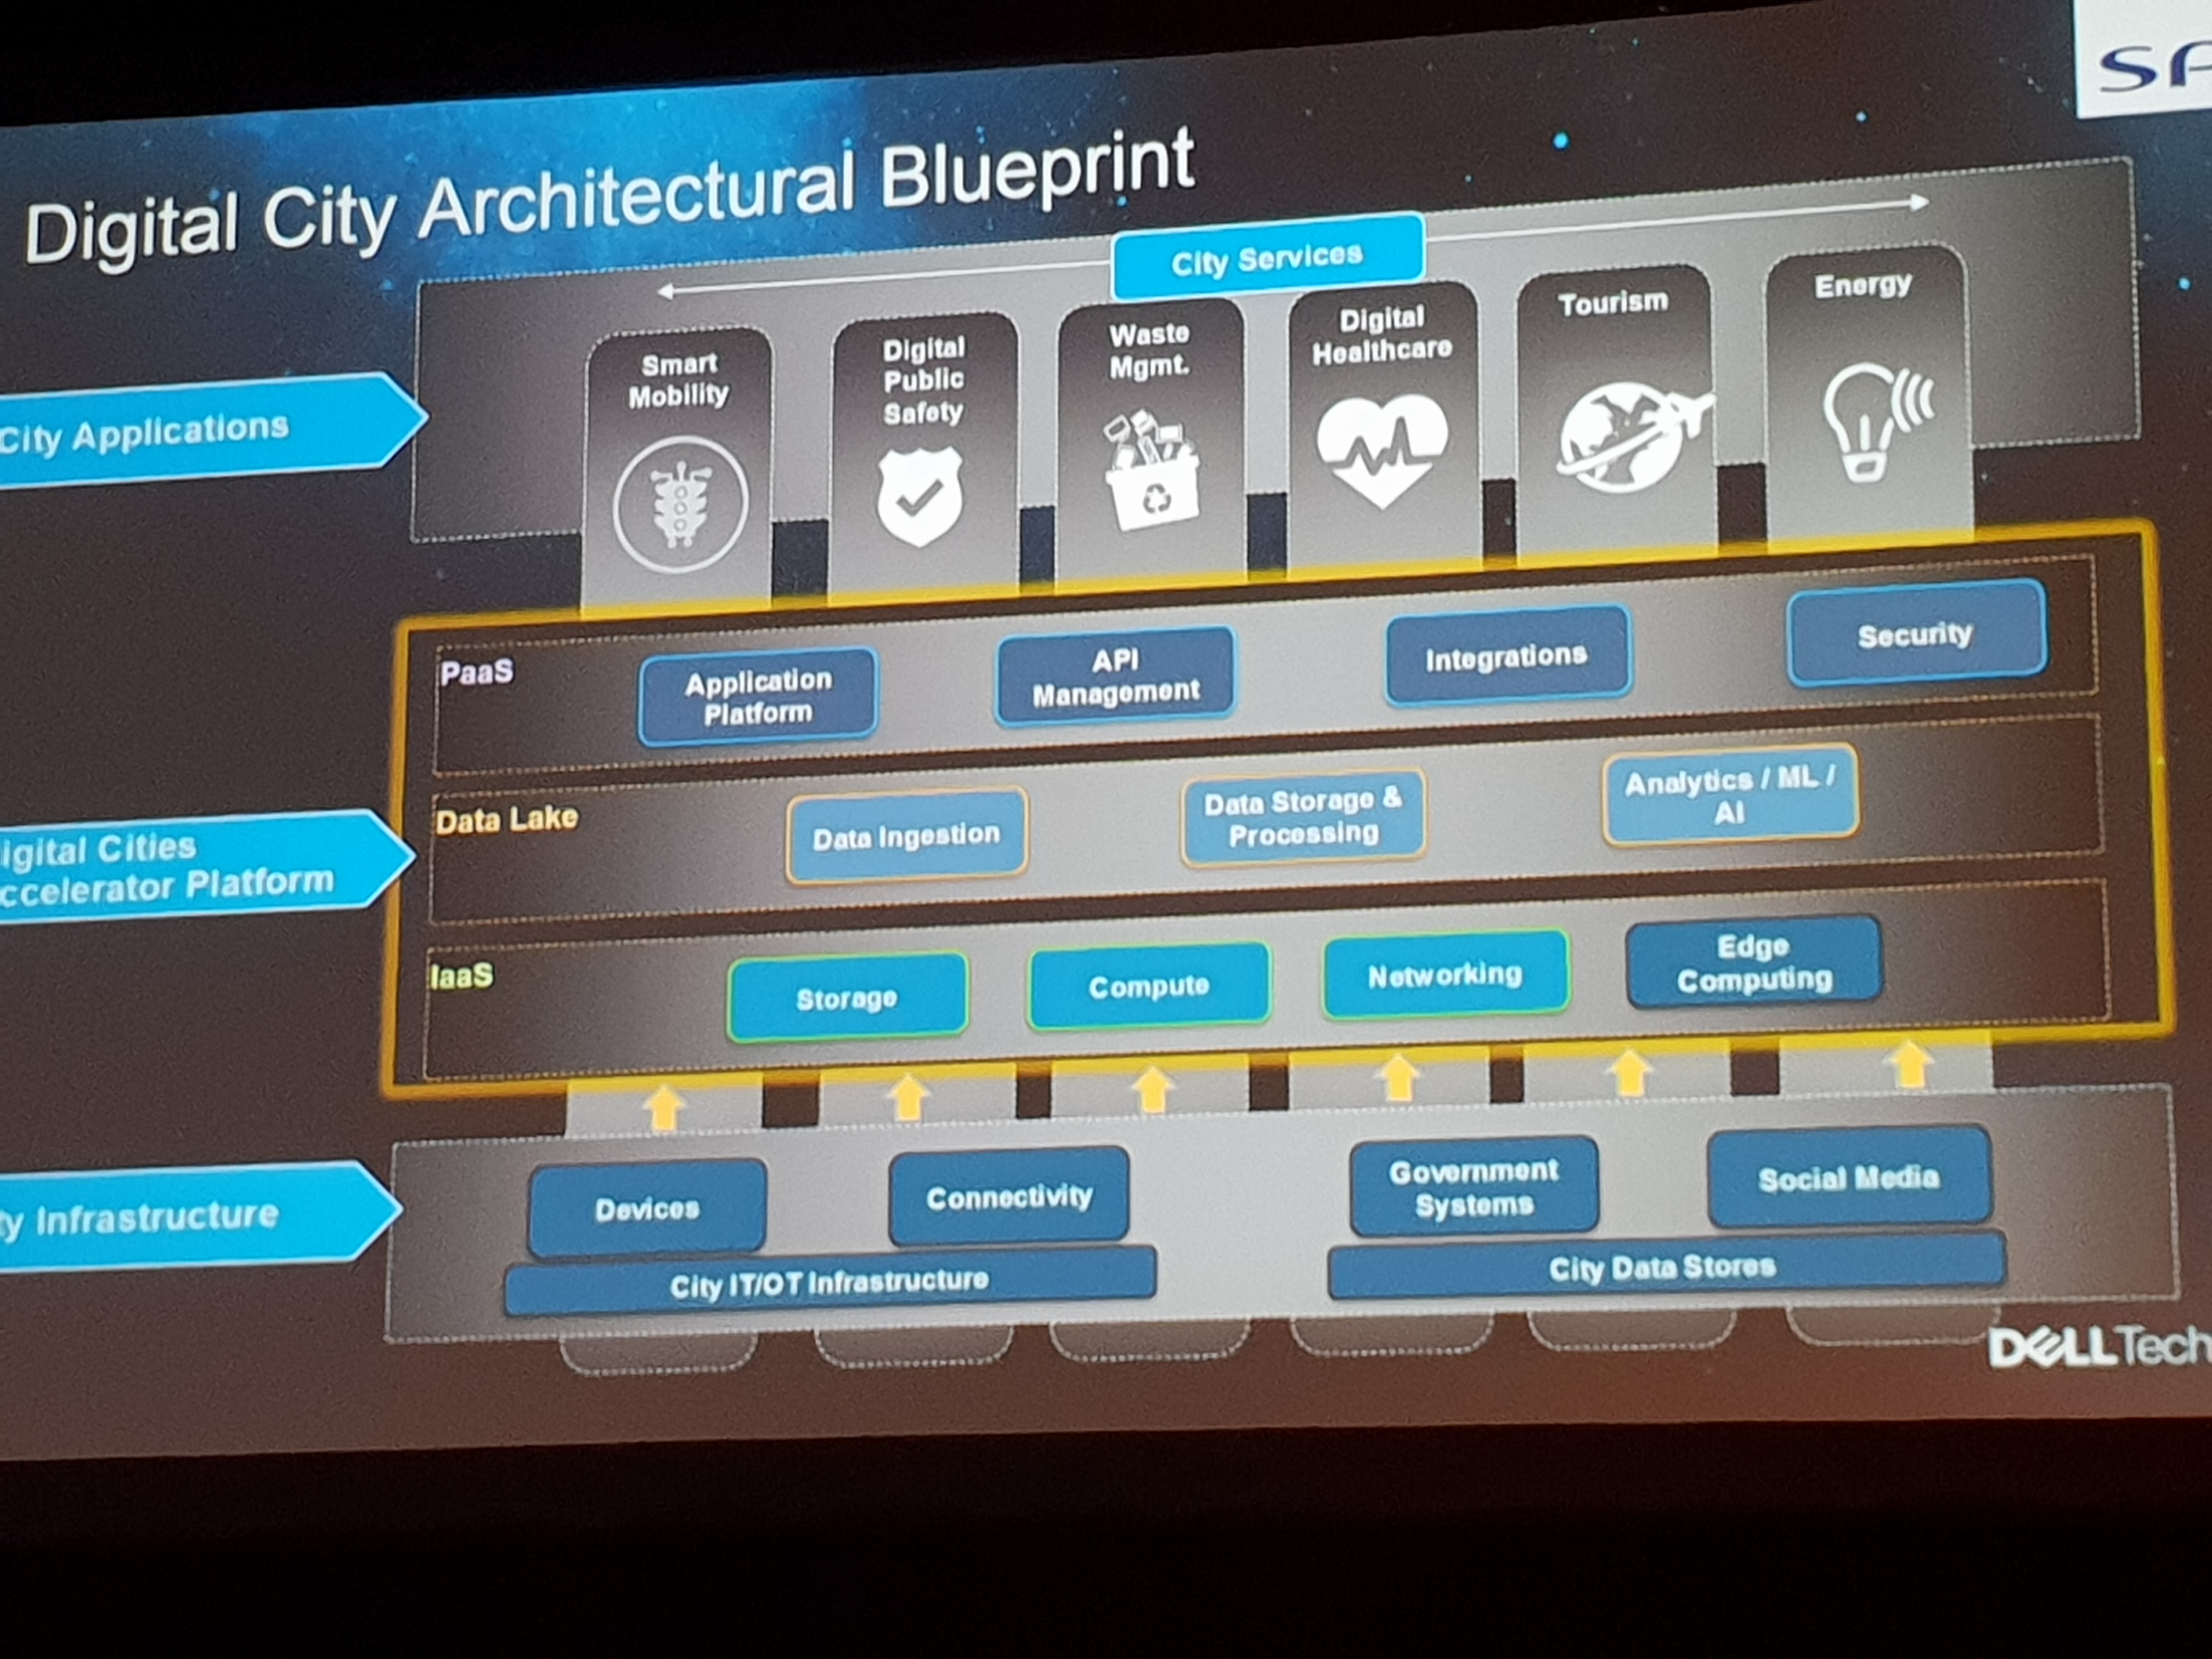 Digital Cities - Digital City Architectural Blueprint